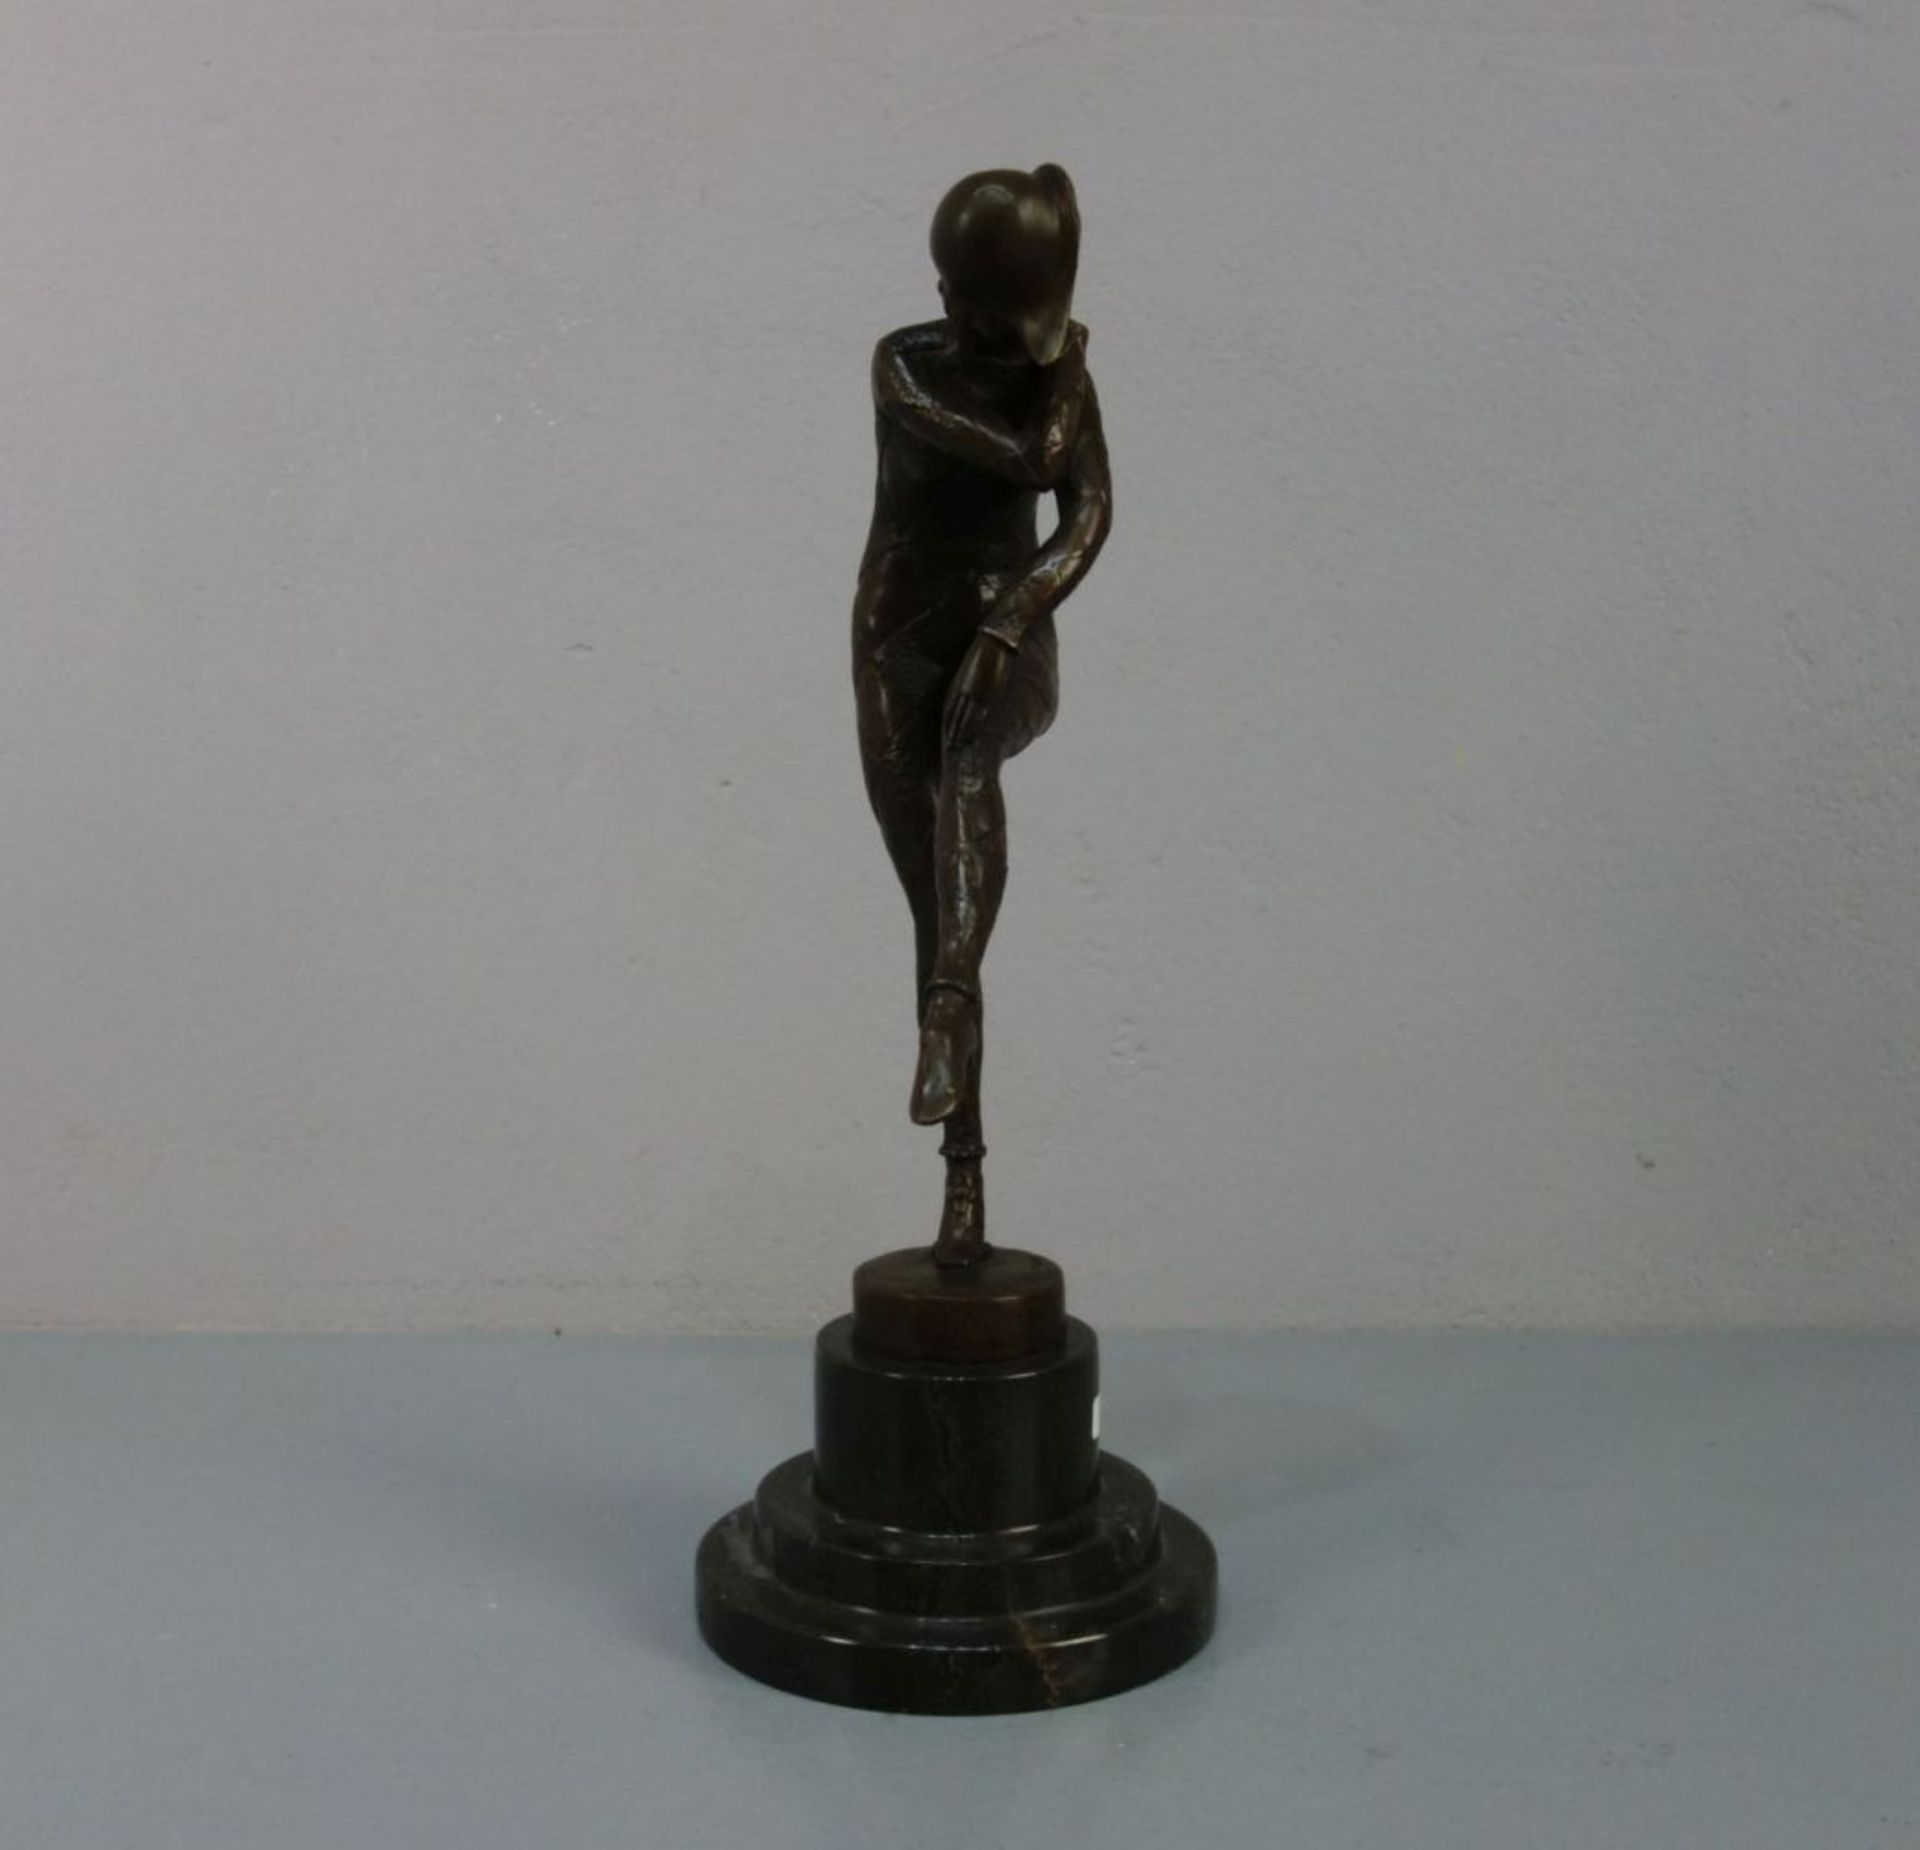 nach CHIPARUS, DÉMETRE HARALAMB (1886-1947), Skulptur / sculpture: "Weiblicher Harlekin", 20. Jh., - Bild 2 aus 4